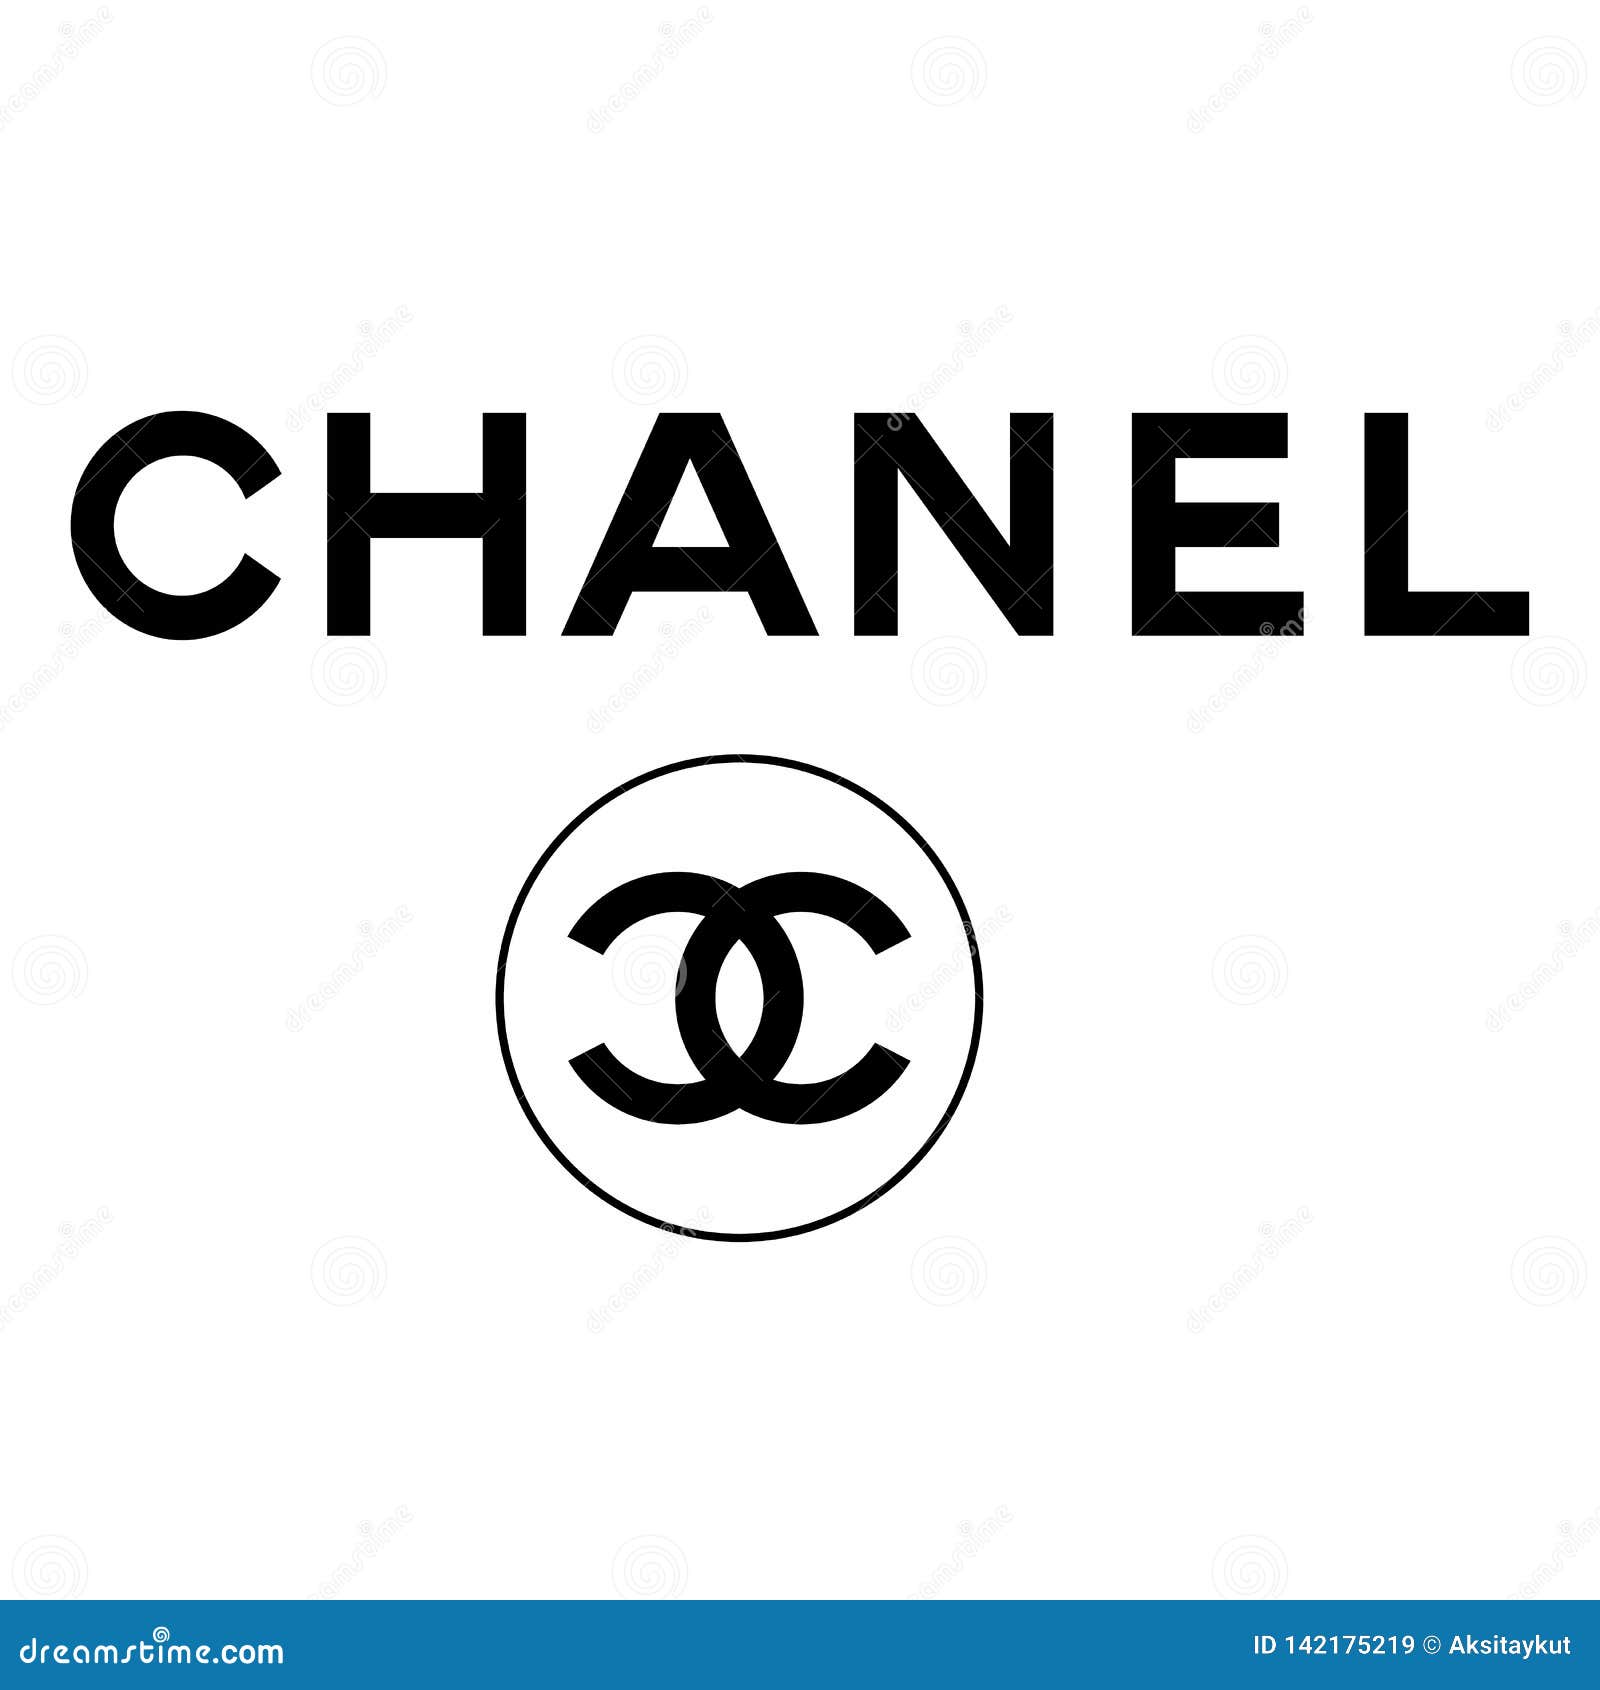 Chanel logo icon editorial stock image. Illustration of